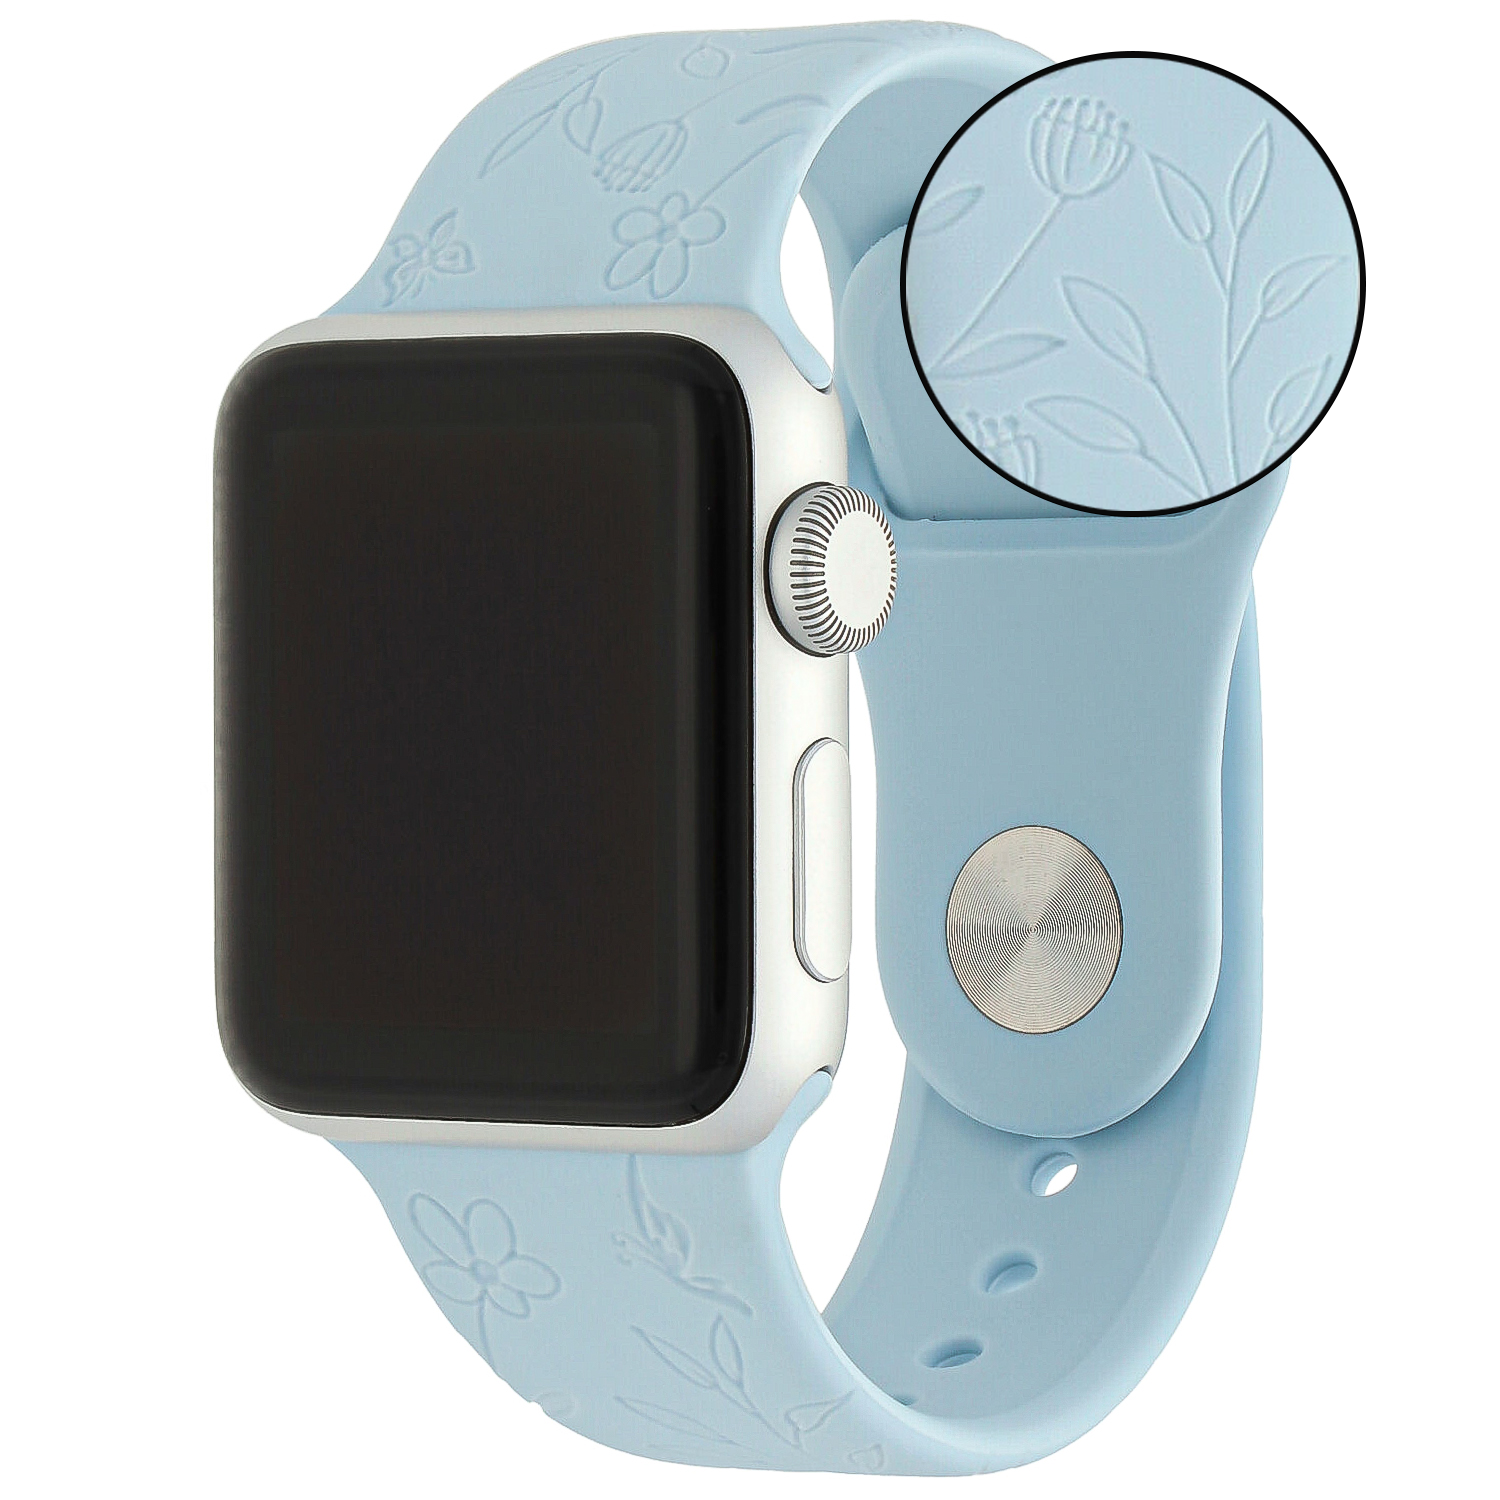 Apple Watch druck Sportarmband - floral blau